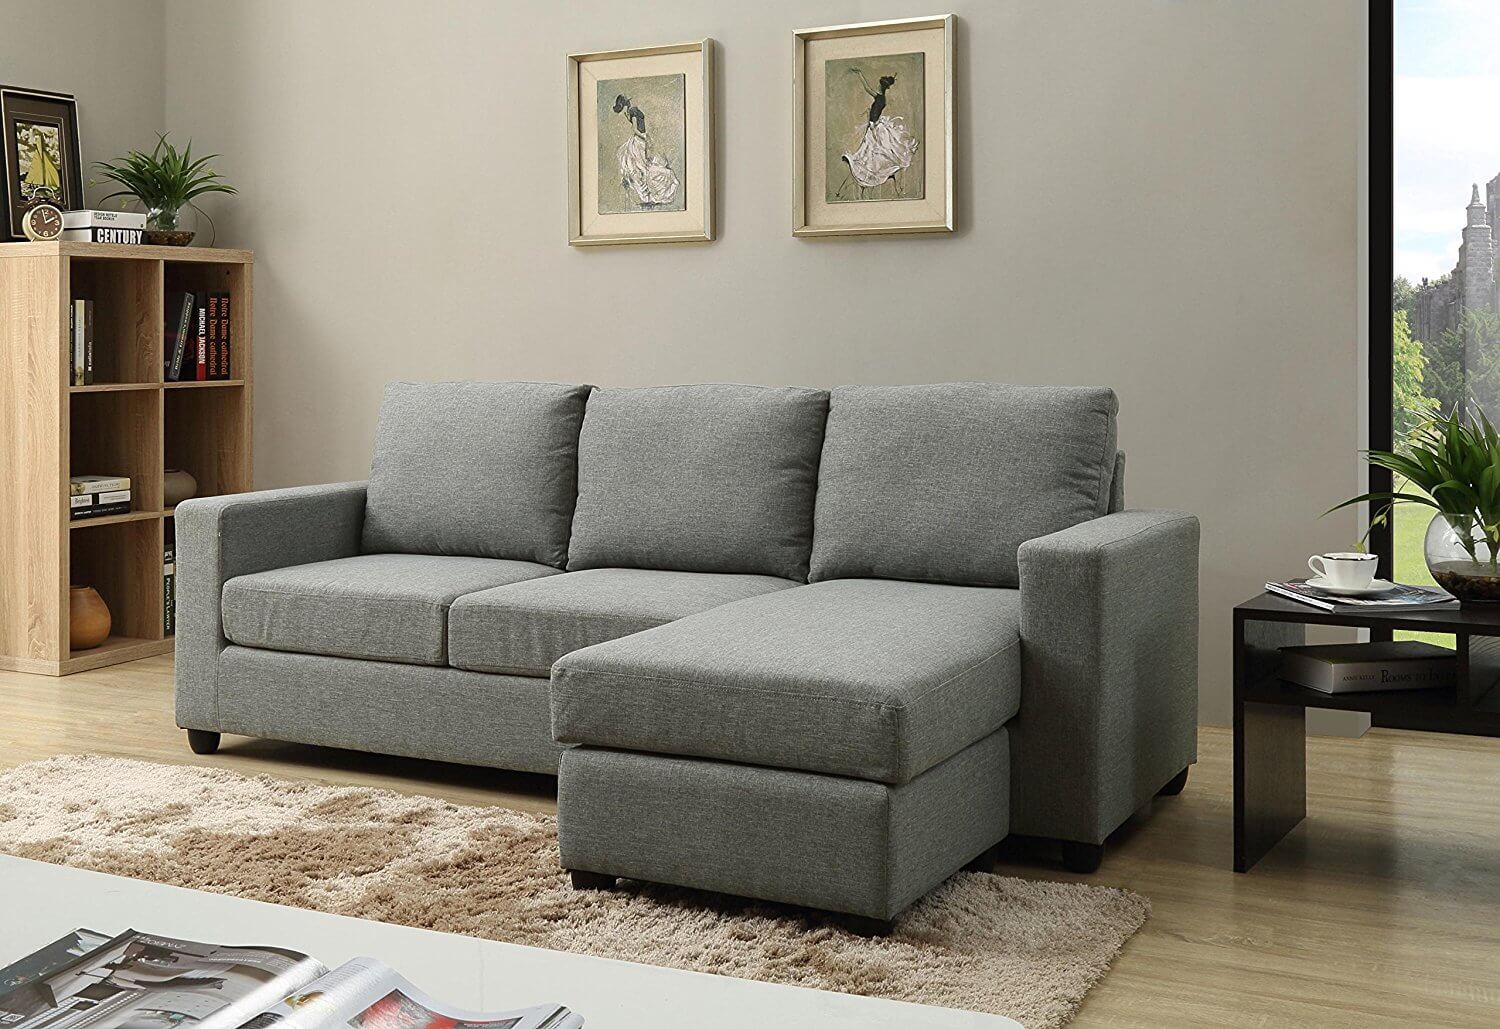 sofa design designed for small spaces TPFWLXG